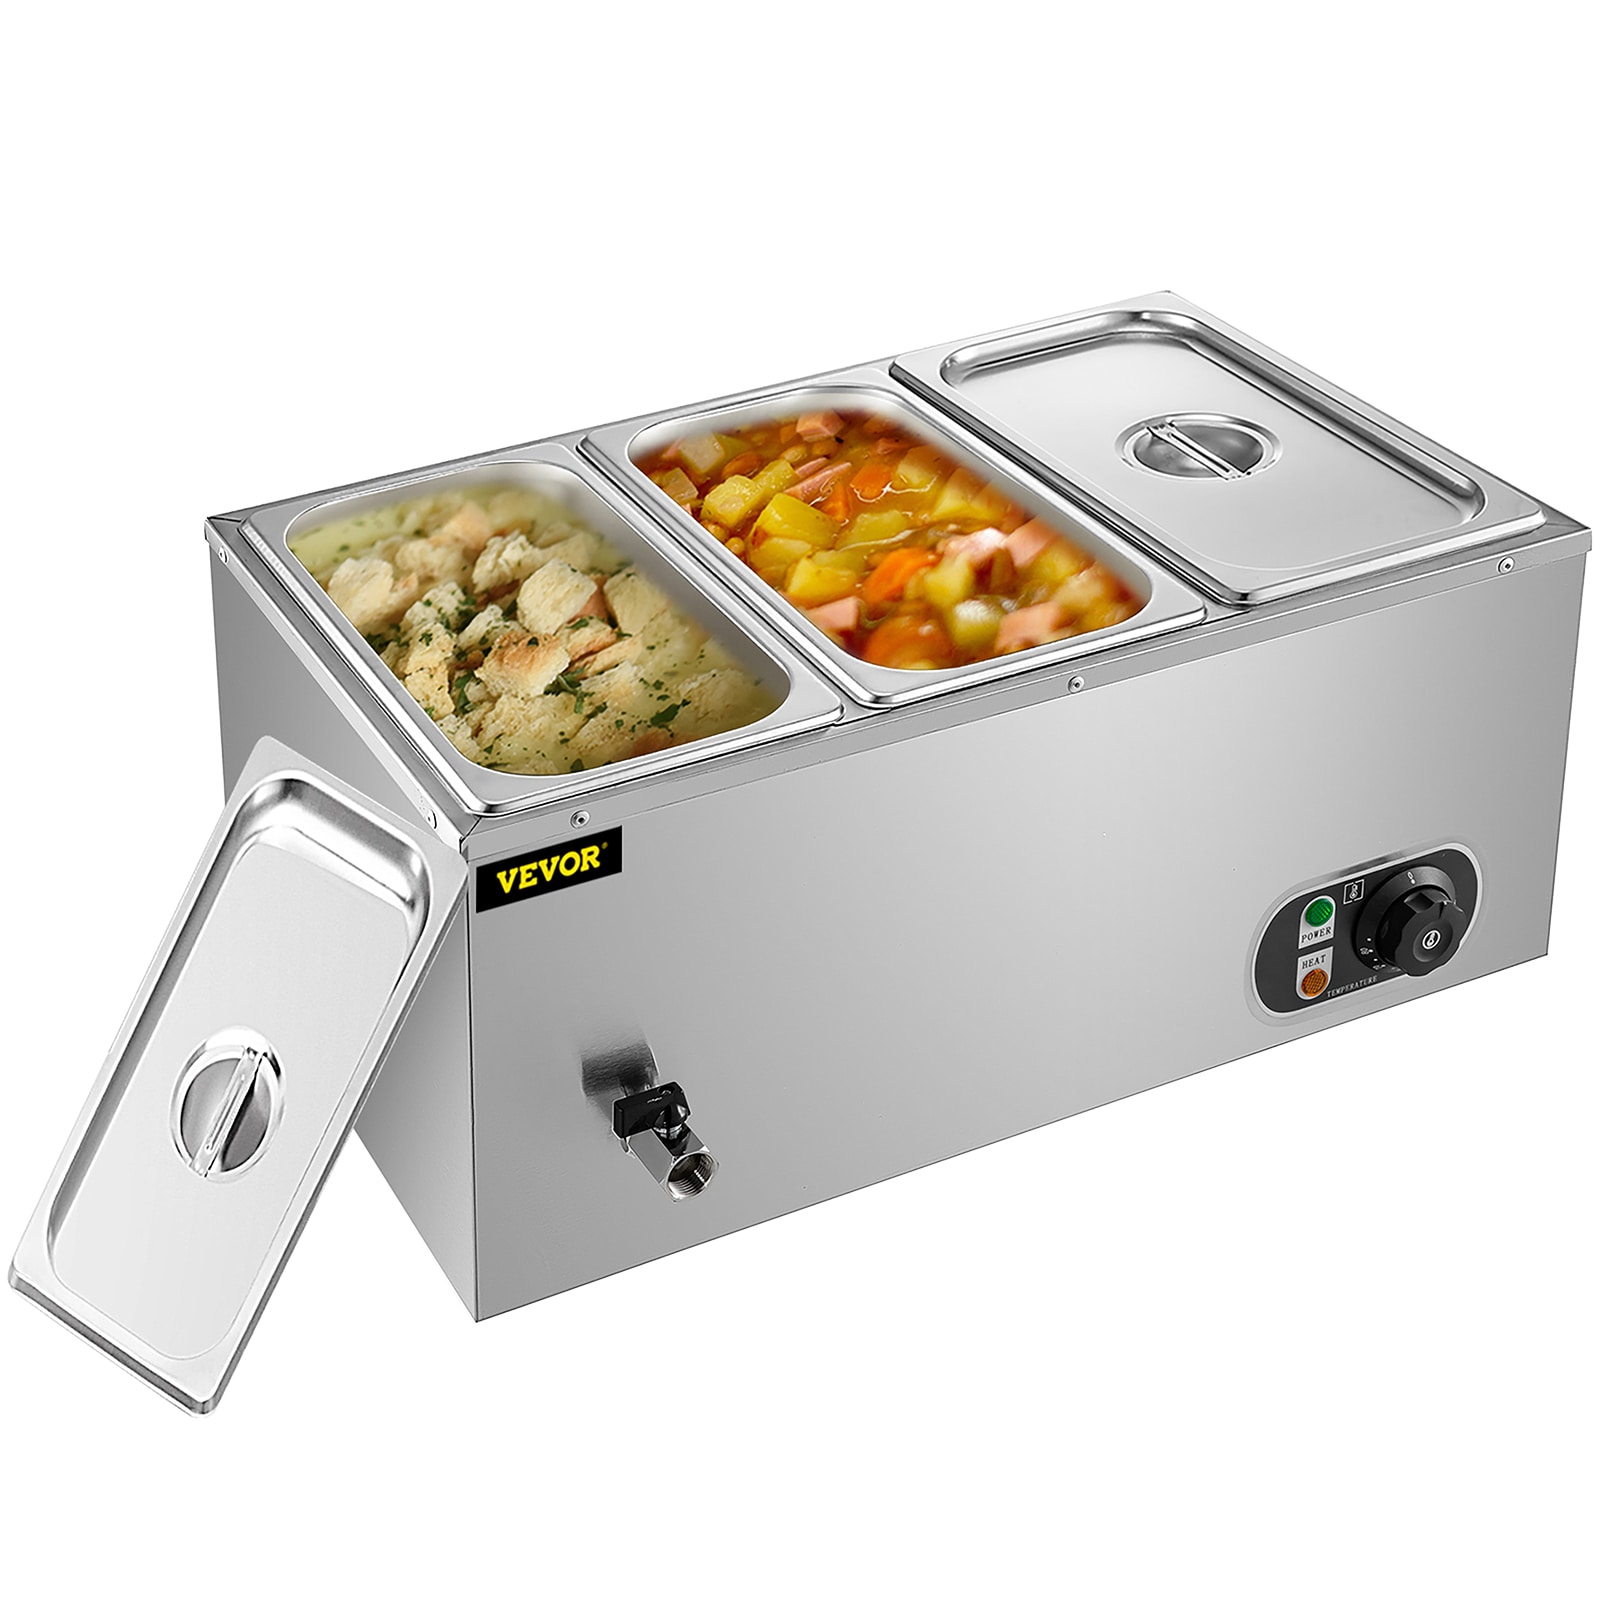 VEVOR 110V 3-Pan Commercial Food Warmer, 1200W Electric Steam